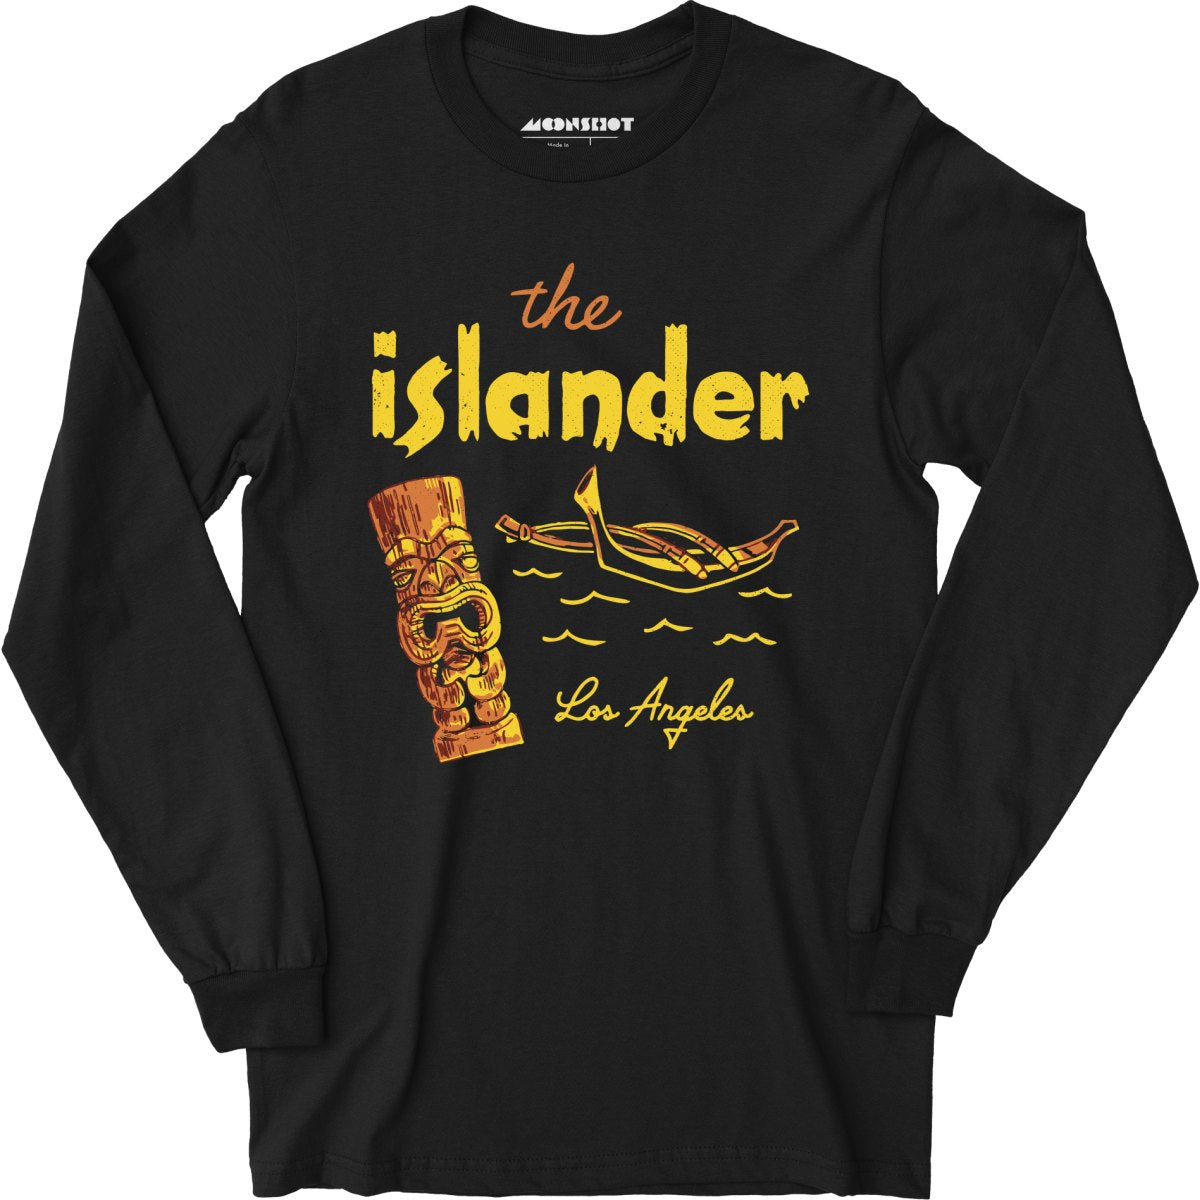 The Islander v2 - Los Angeles, CA - Vintage Tiki Bar - Long Sleeve T-Shirt